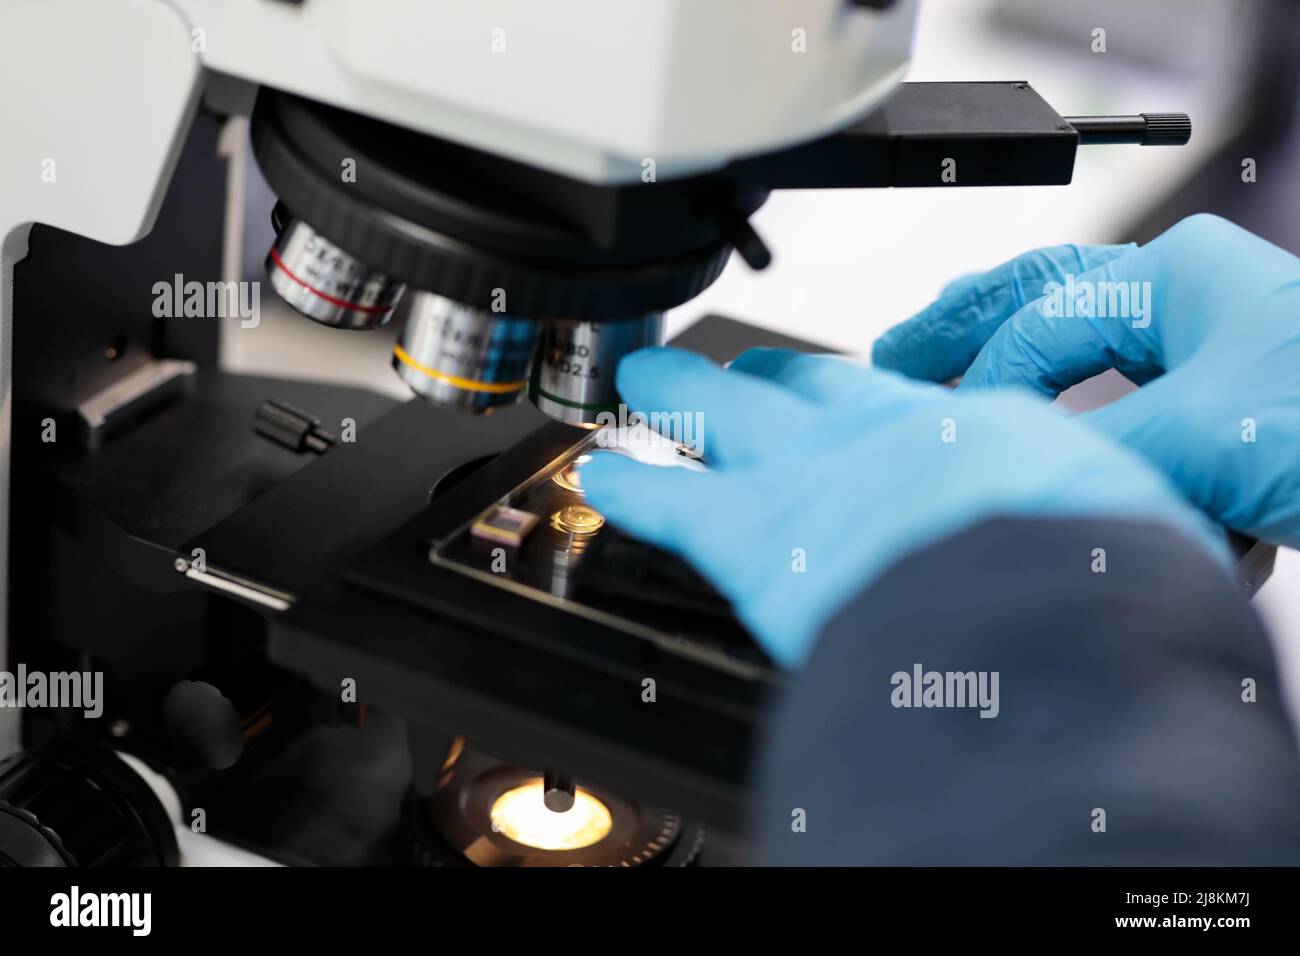 Preparación de microscopio fotografías e imágenes de alta resolución - Alamy